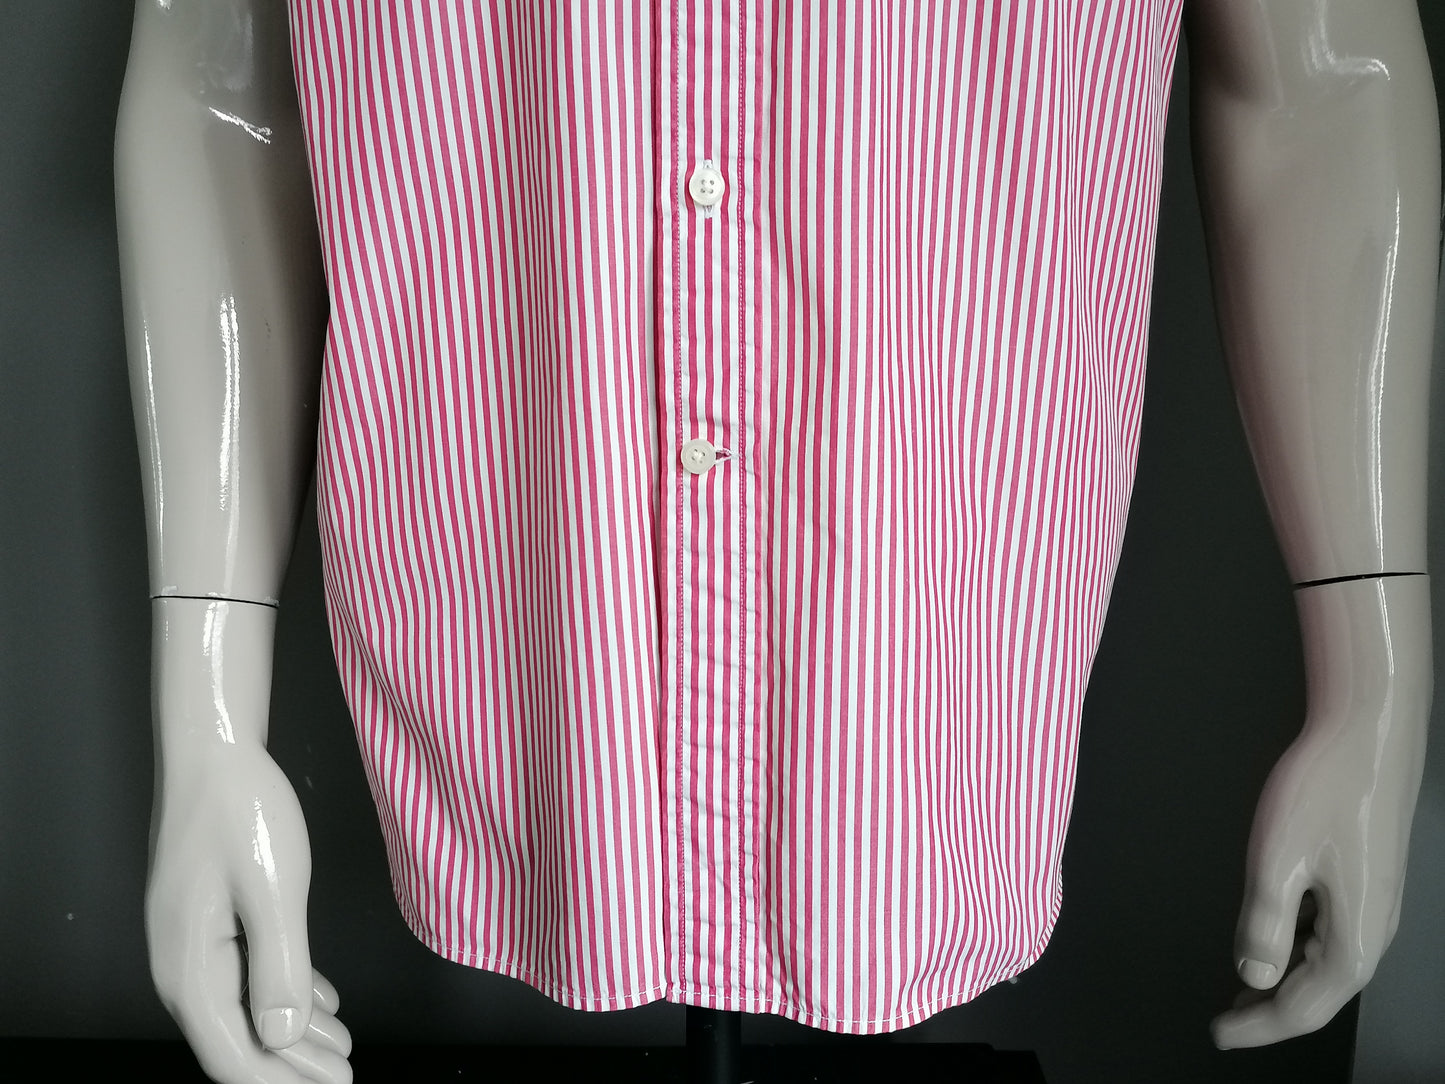 Gant shirt short sleeve. Red white striped. Size L. Type Liberty Bell Poplin. Regular fit.